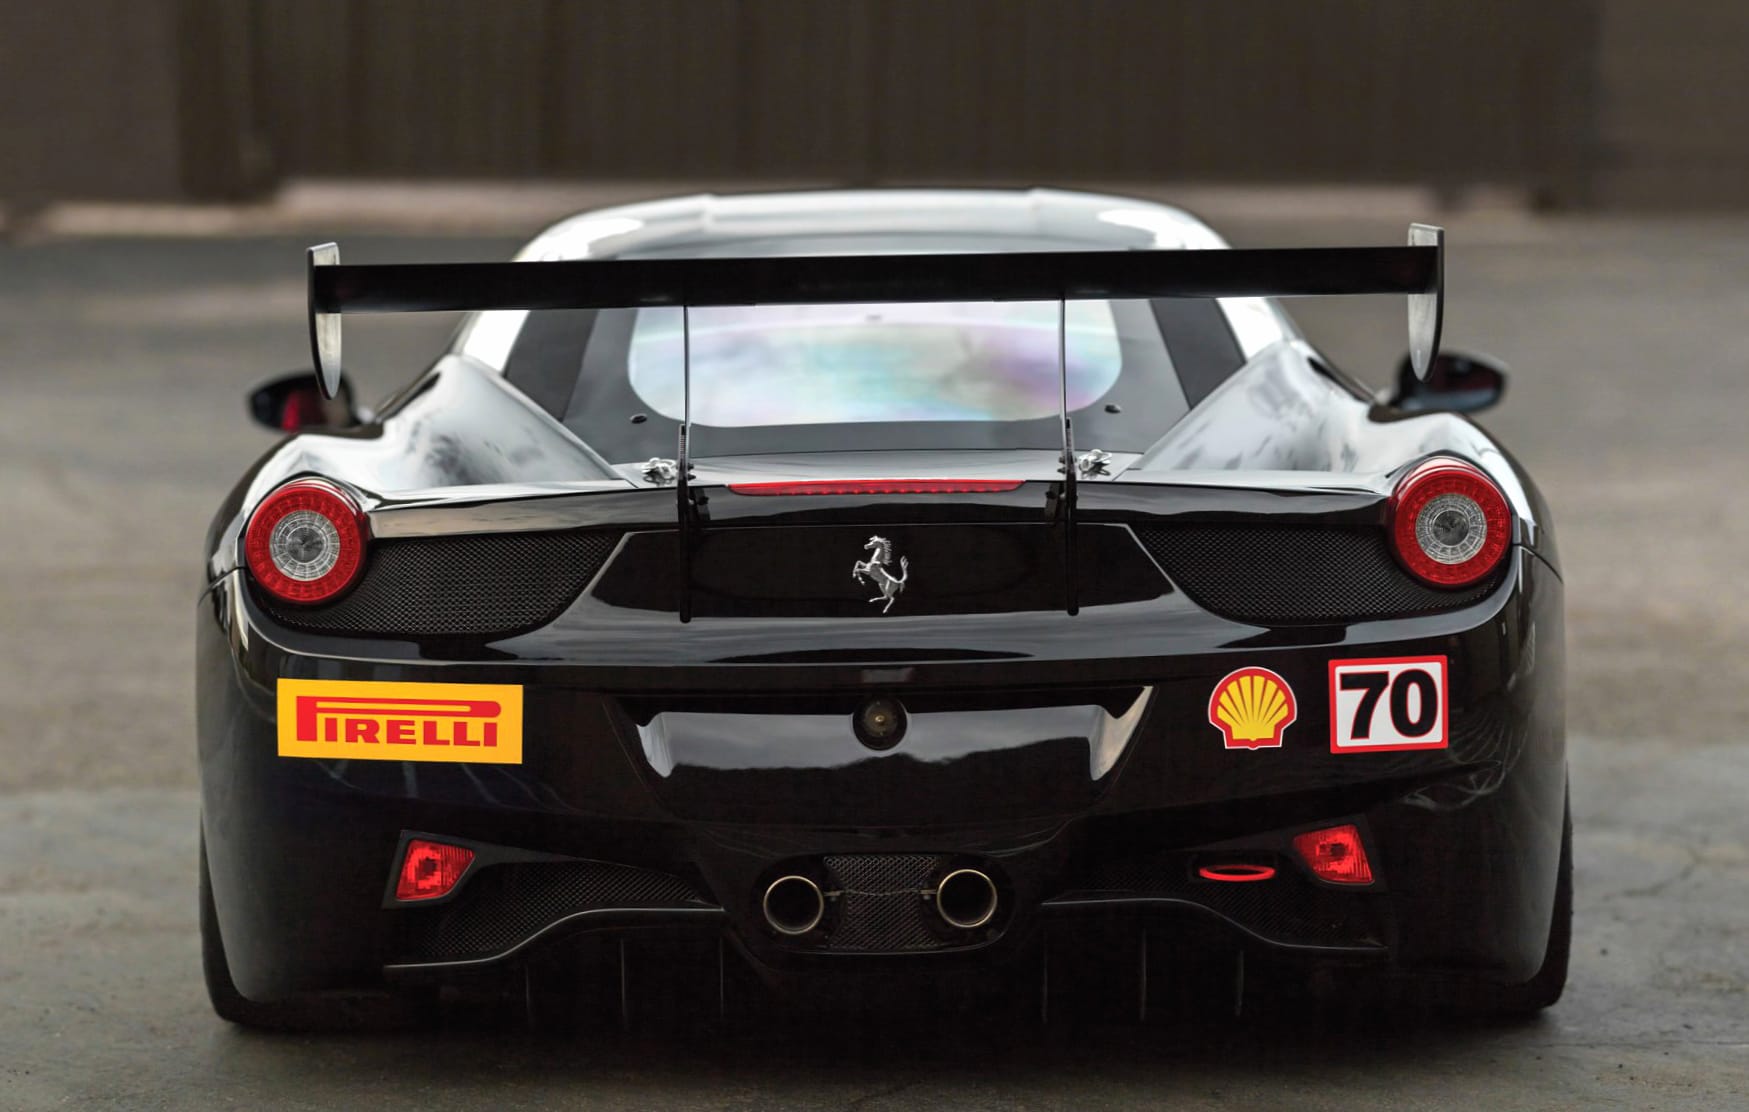 Ferrari 458 Challenge Evoluzione at 1280 x 960 size wallpapers HD quality